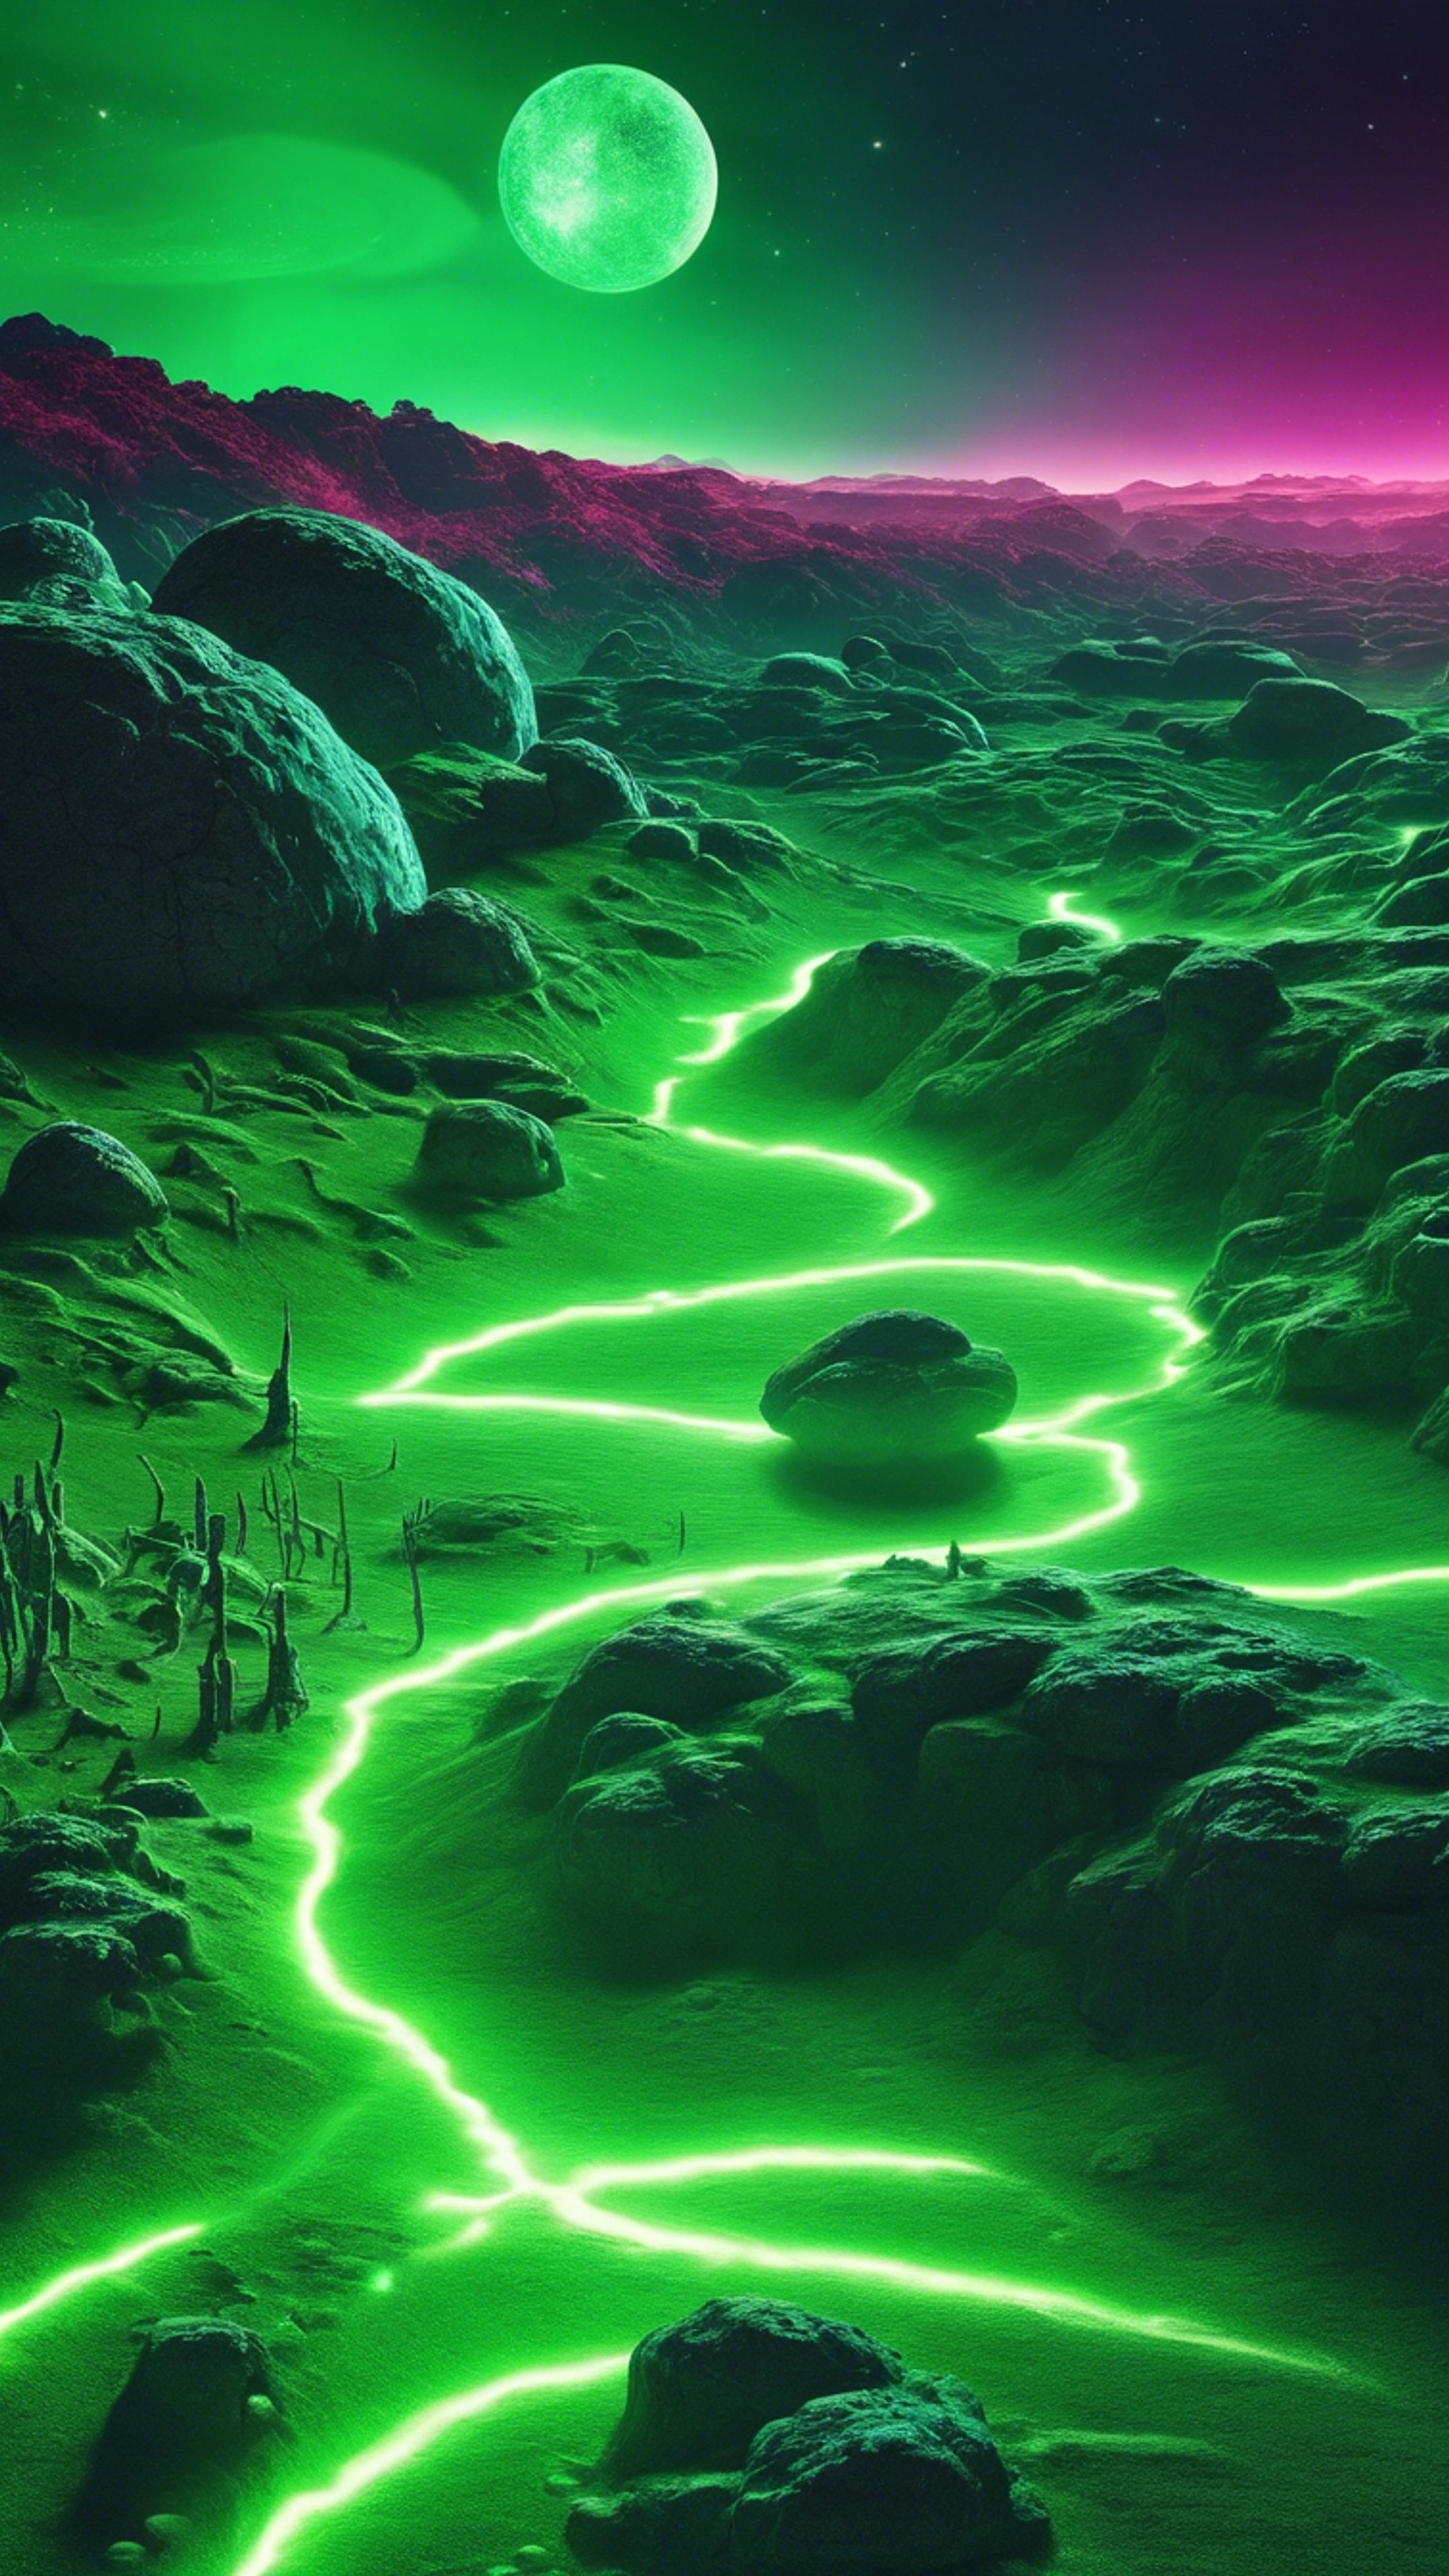 An alien planet landscape illuminated with cool neon green light.壁紙[c1d7fd56055c47ca89e3]